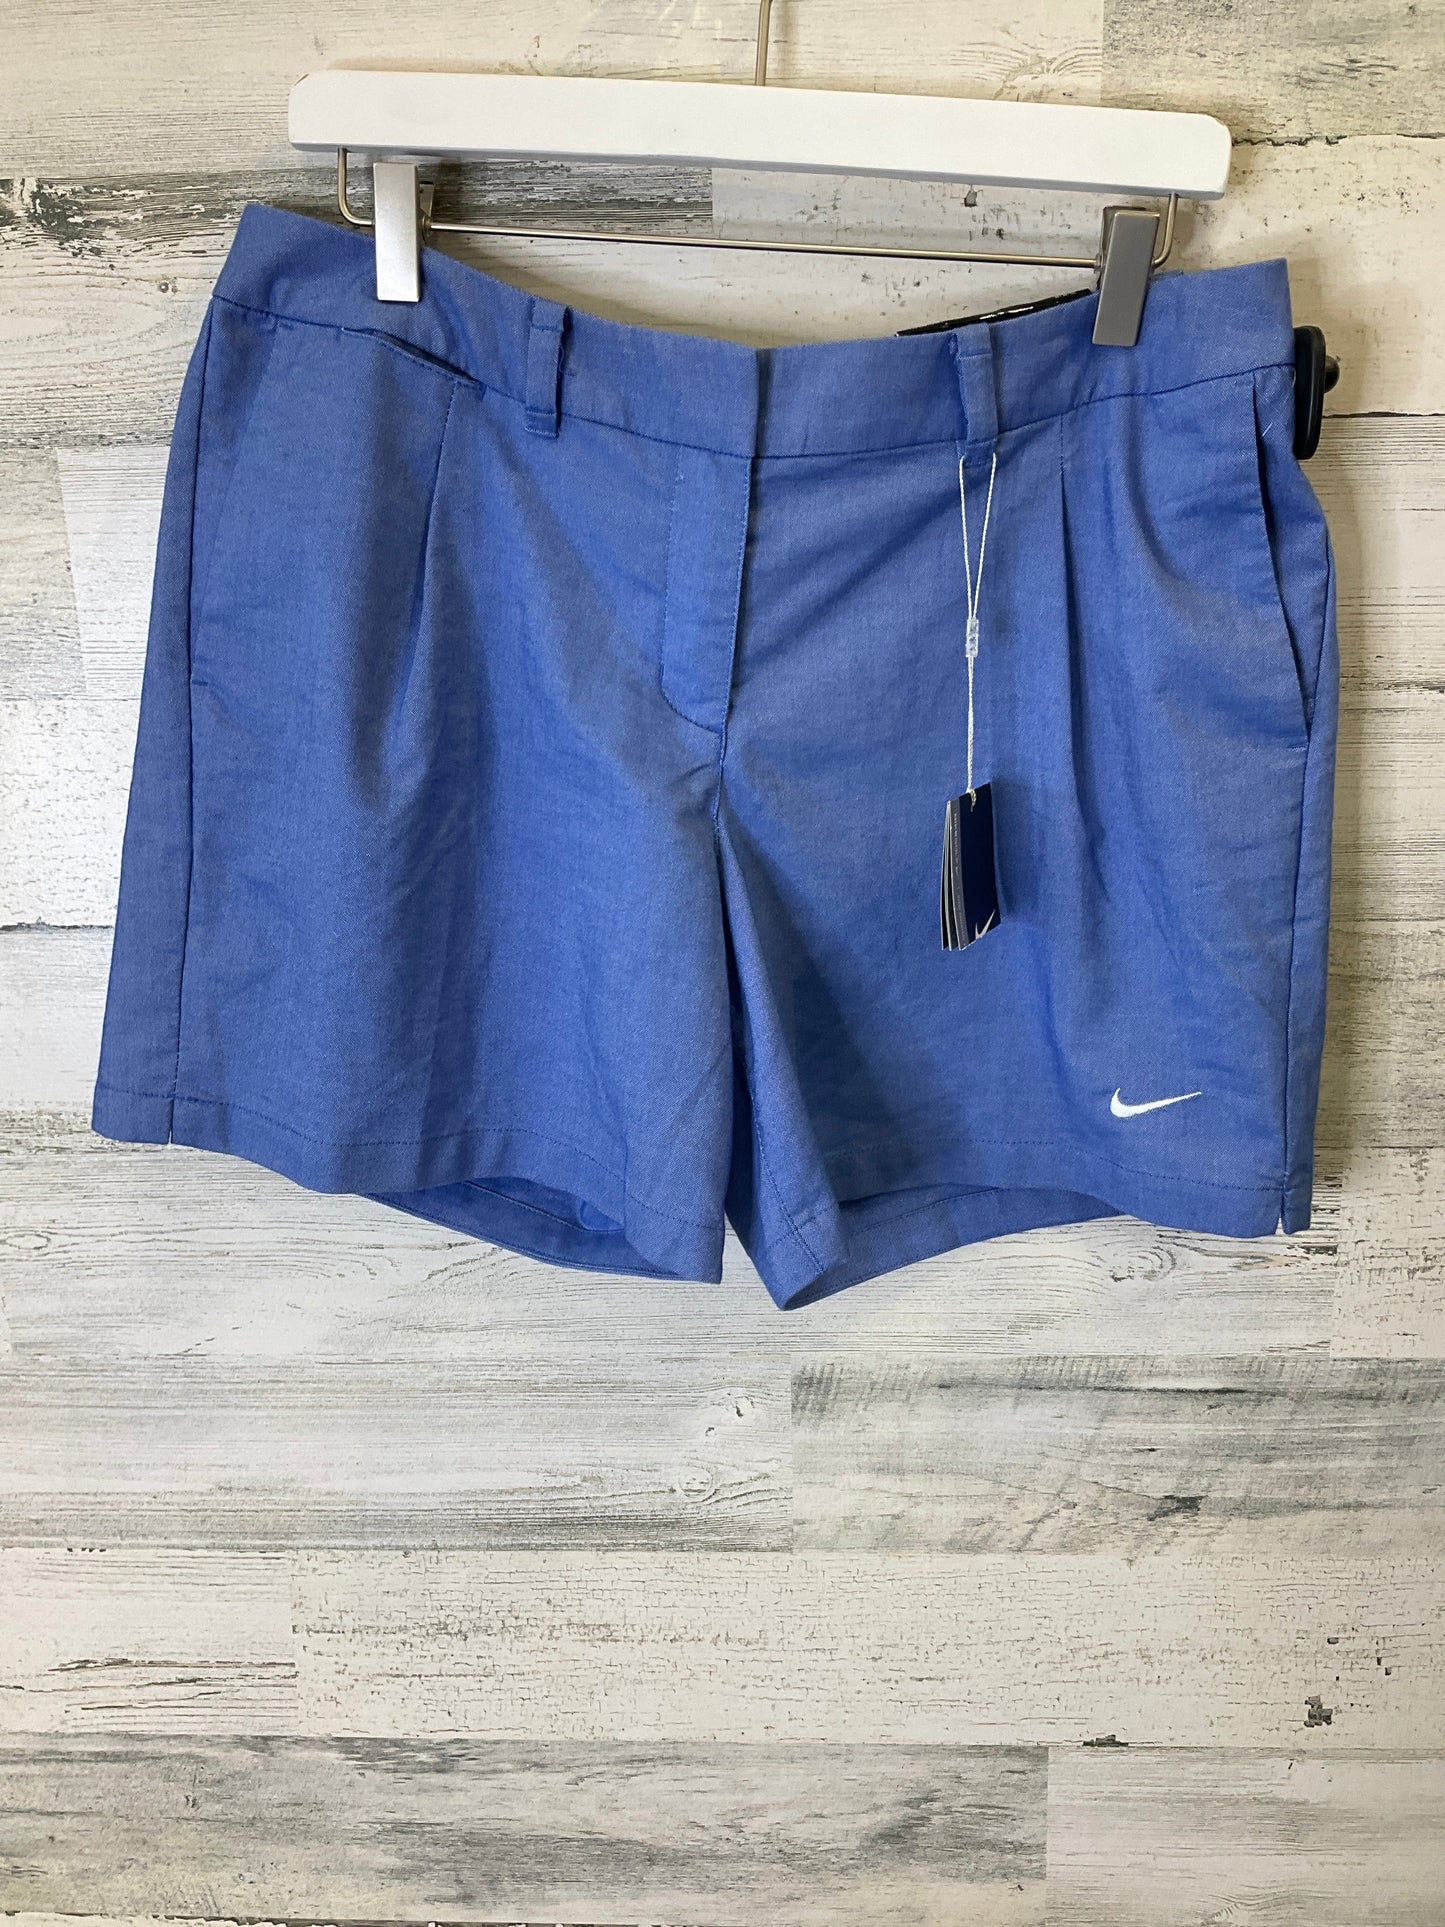 Blue Athletic Shorts Nike Apparel, Size 10